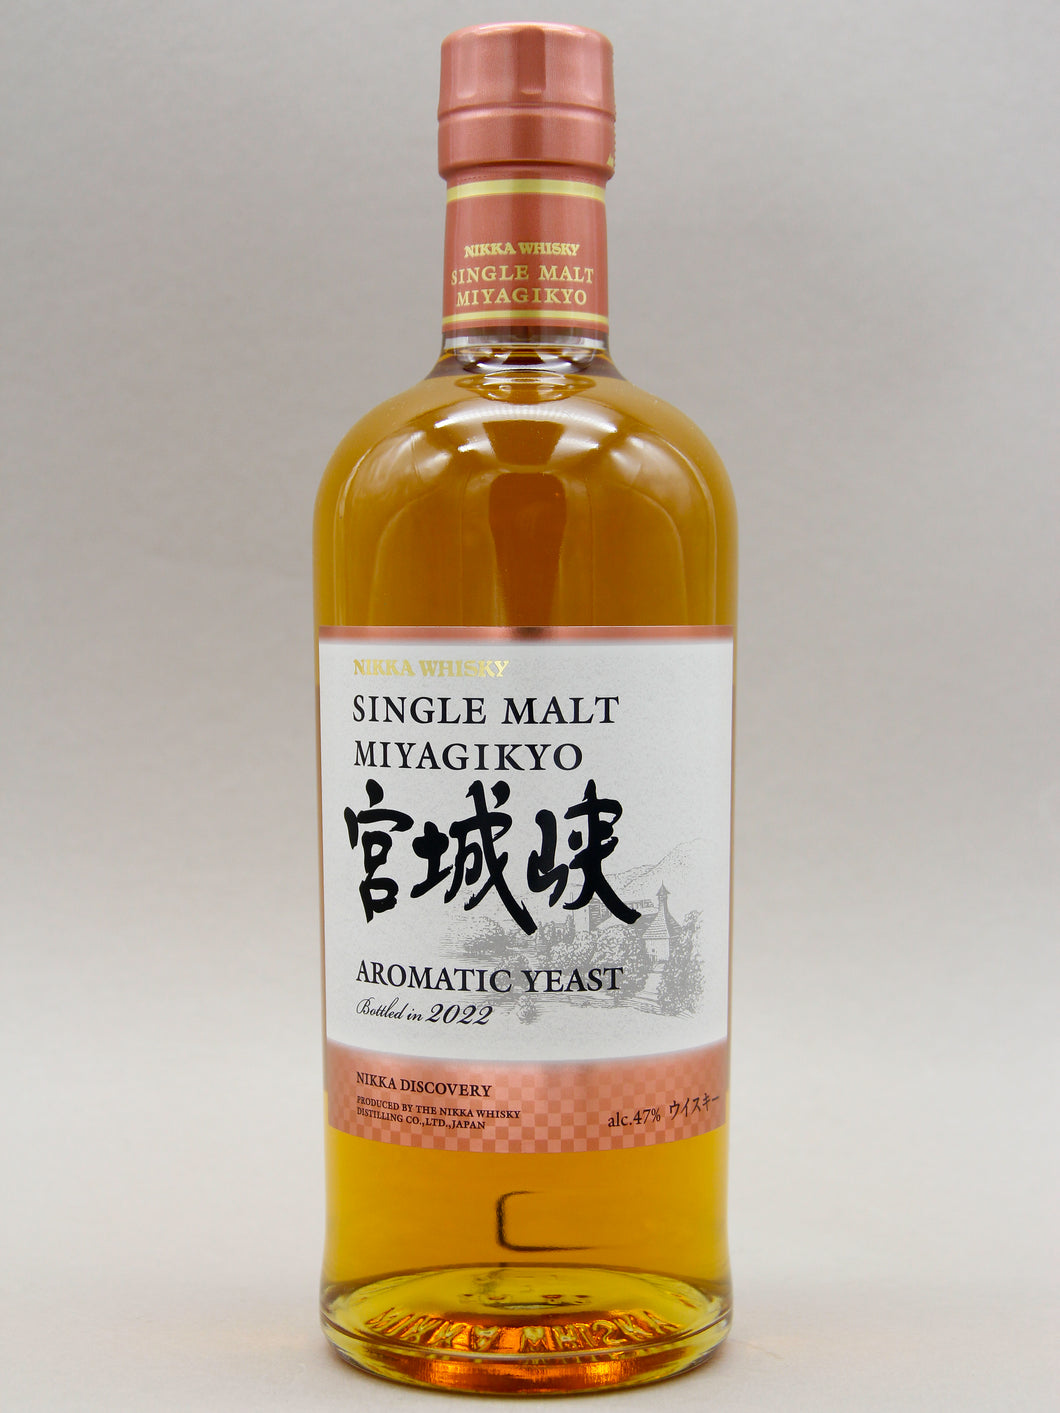 Nikka Whisky Miyagikyo. Single Malt, Aromatic Yeast, 2022, Japan (47%, 70cl)